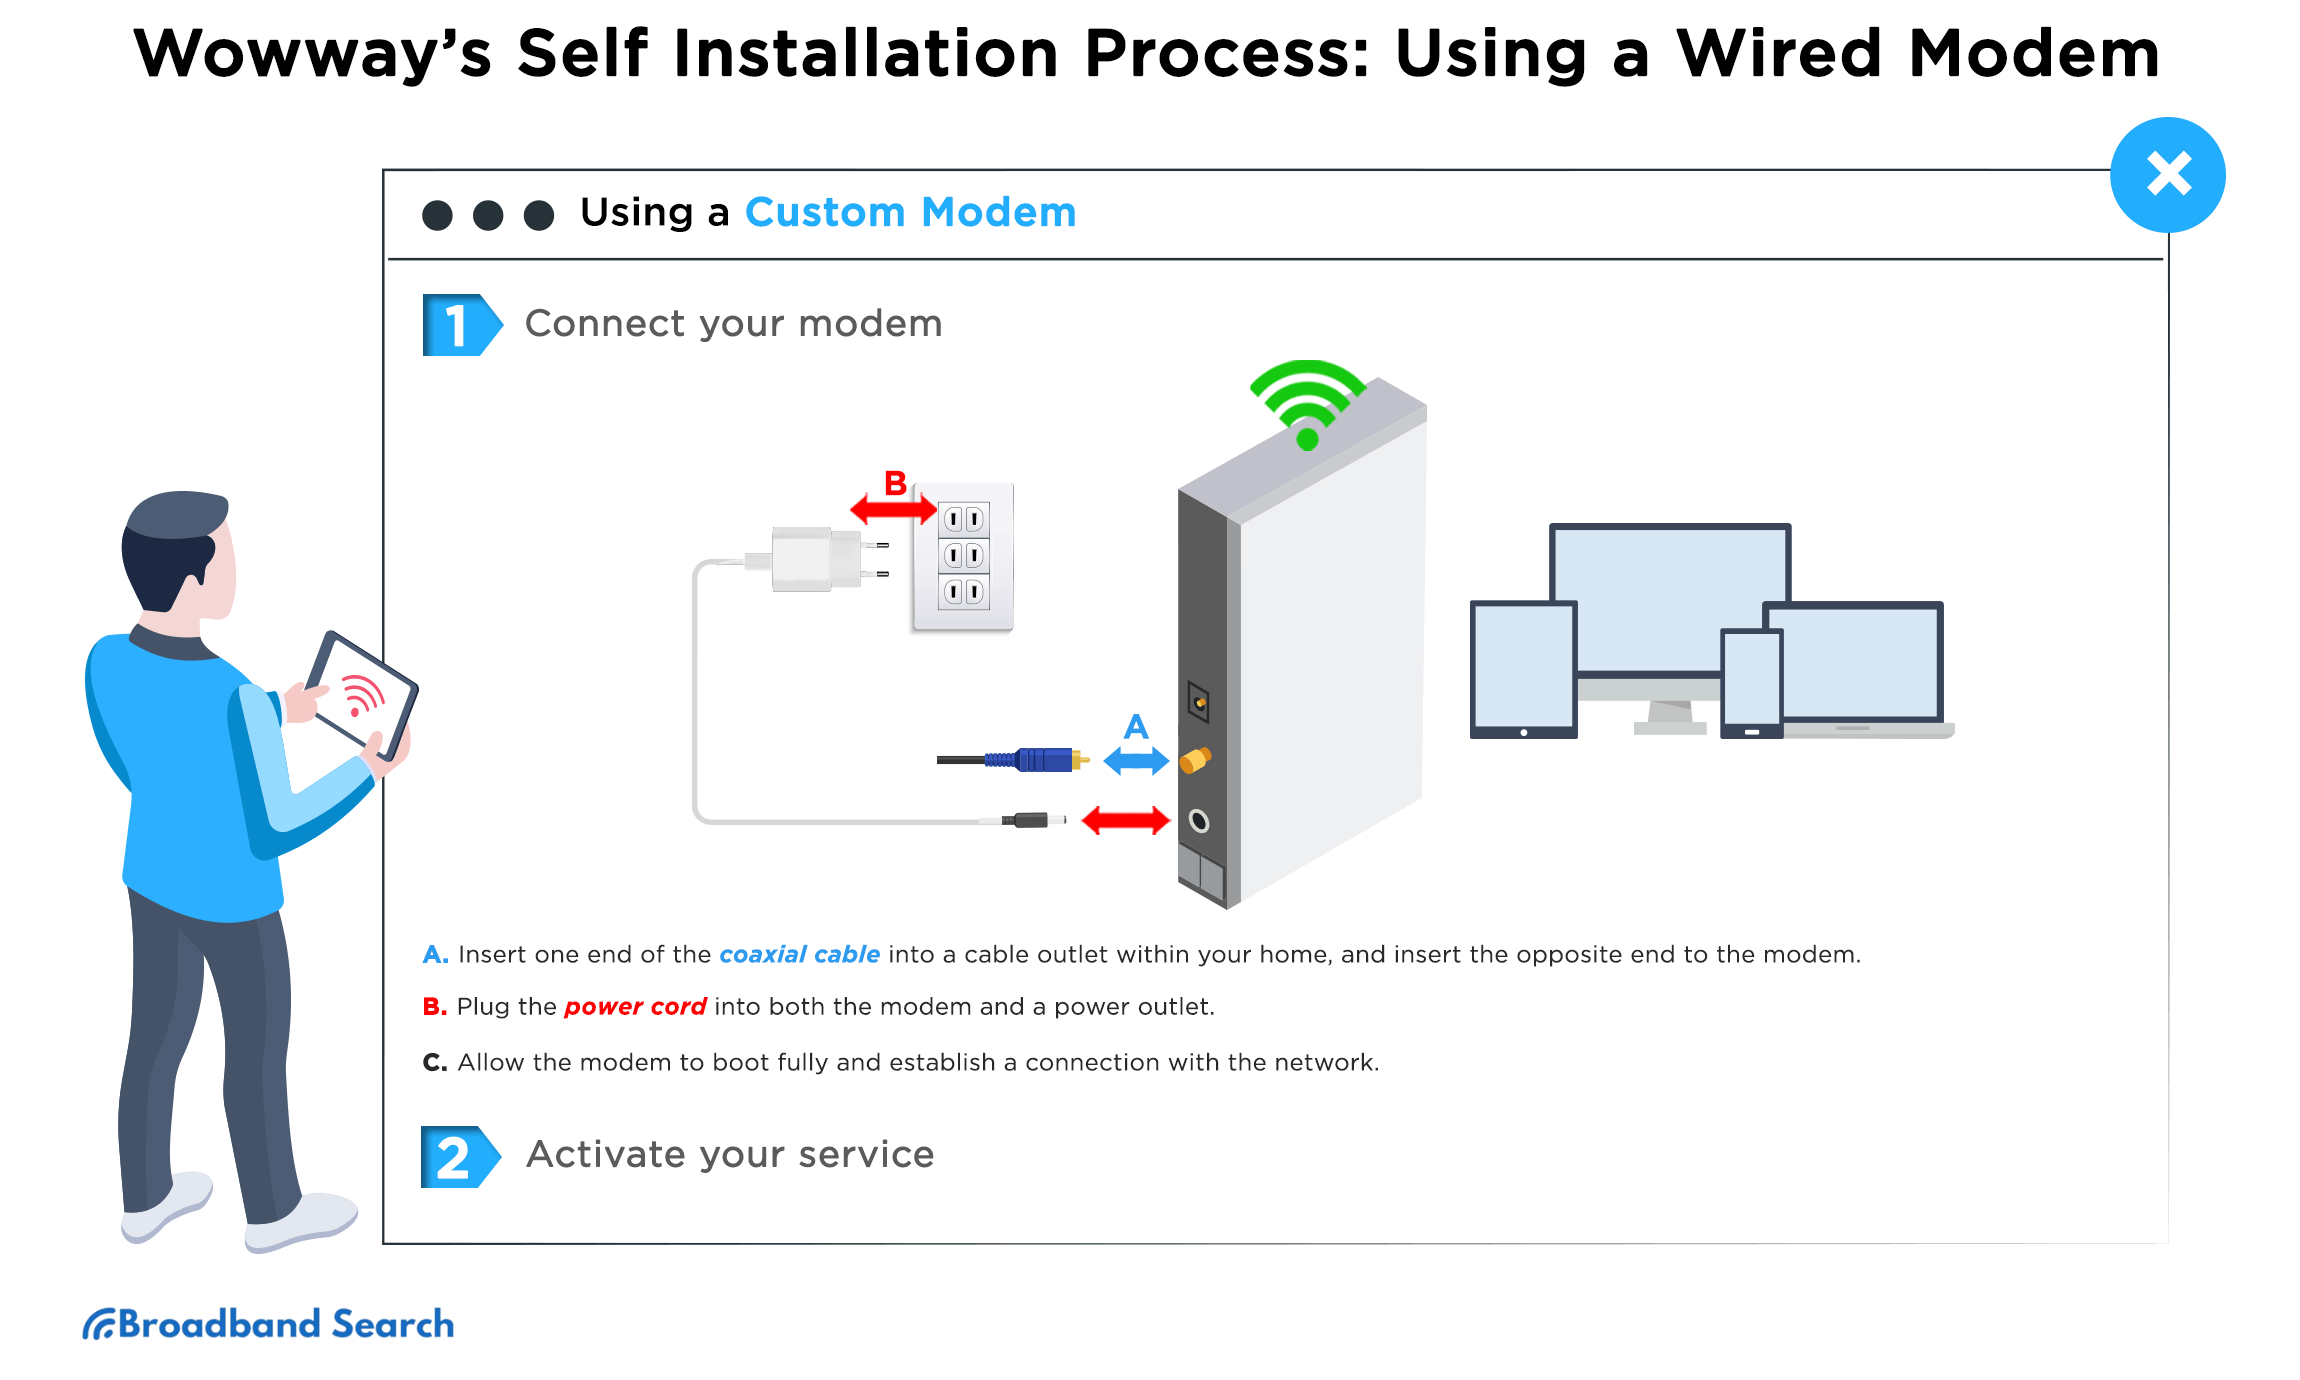 Wowway’s Self Installation Process: Using a Custom Modem